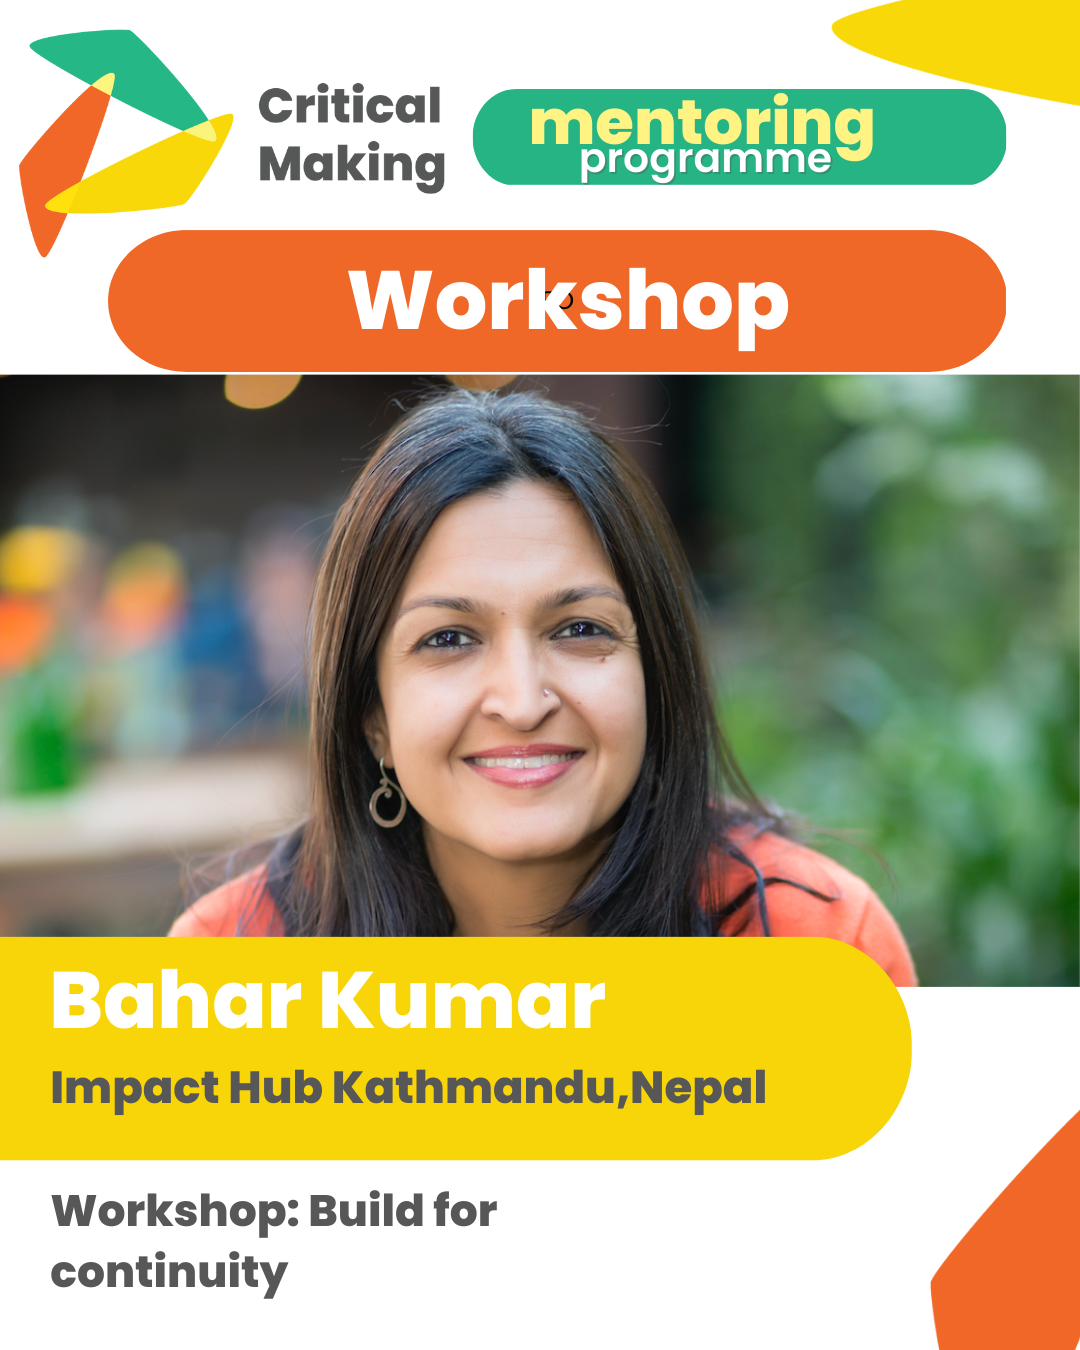 Bahar workshop: Build for continuity